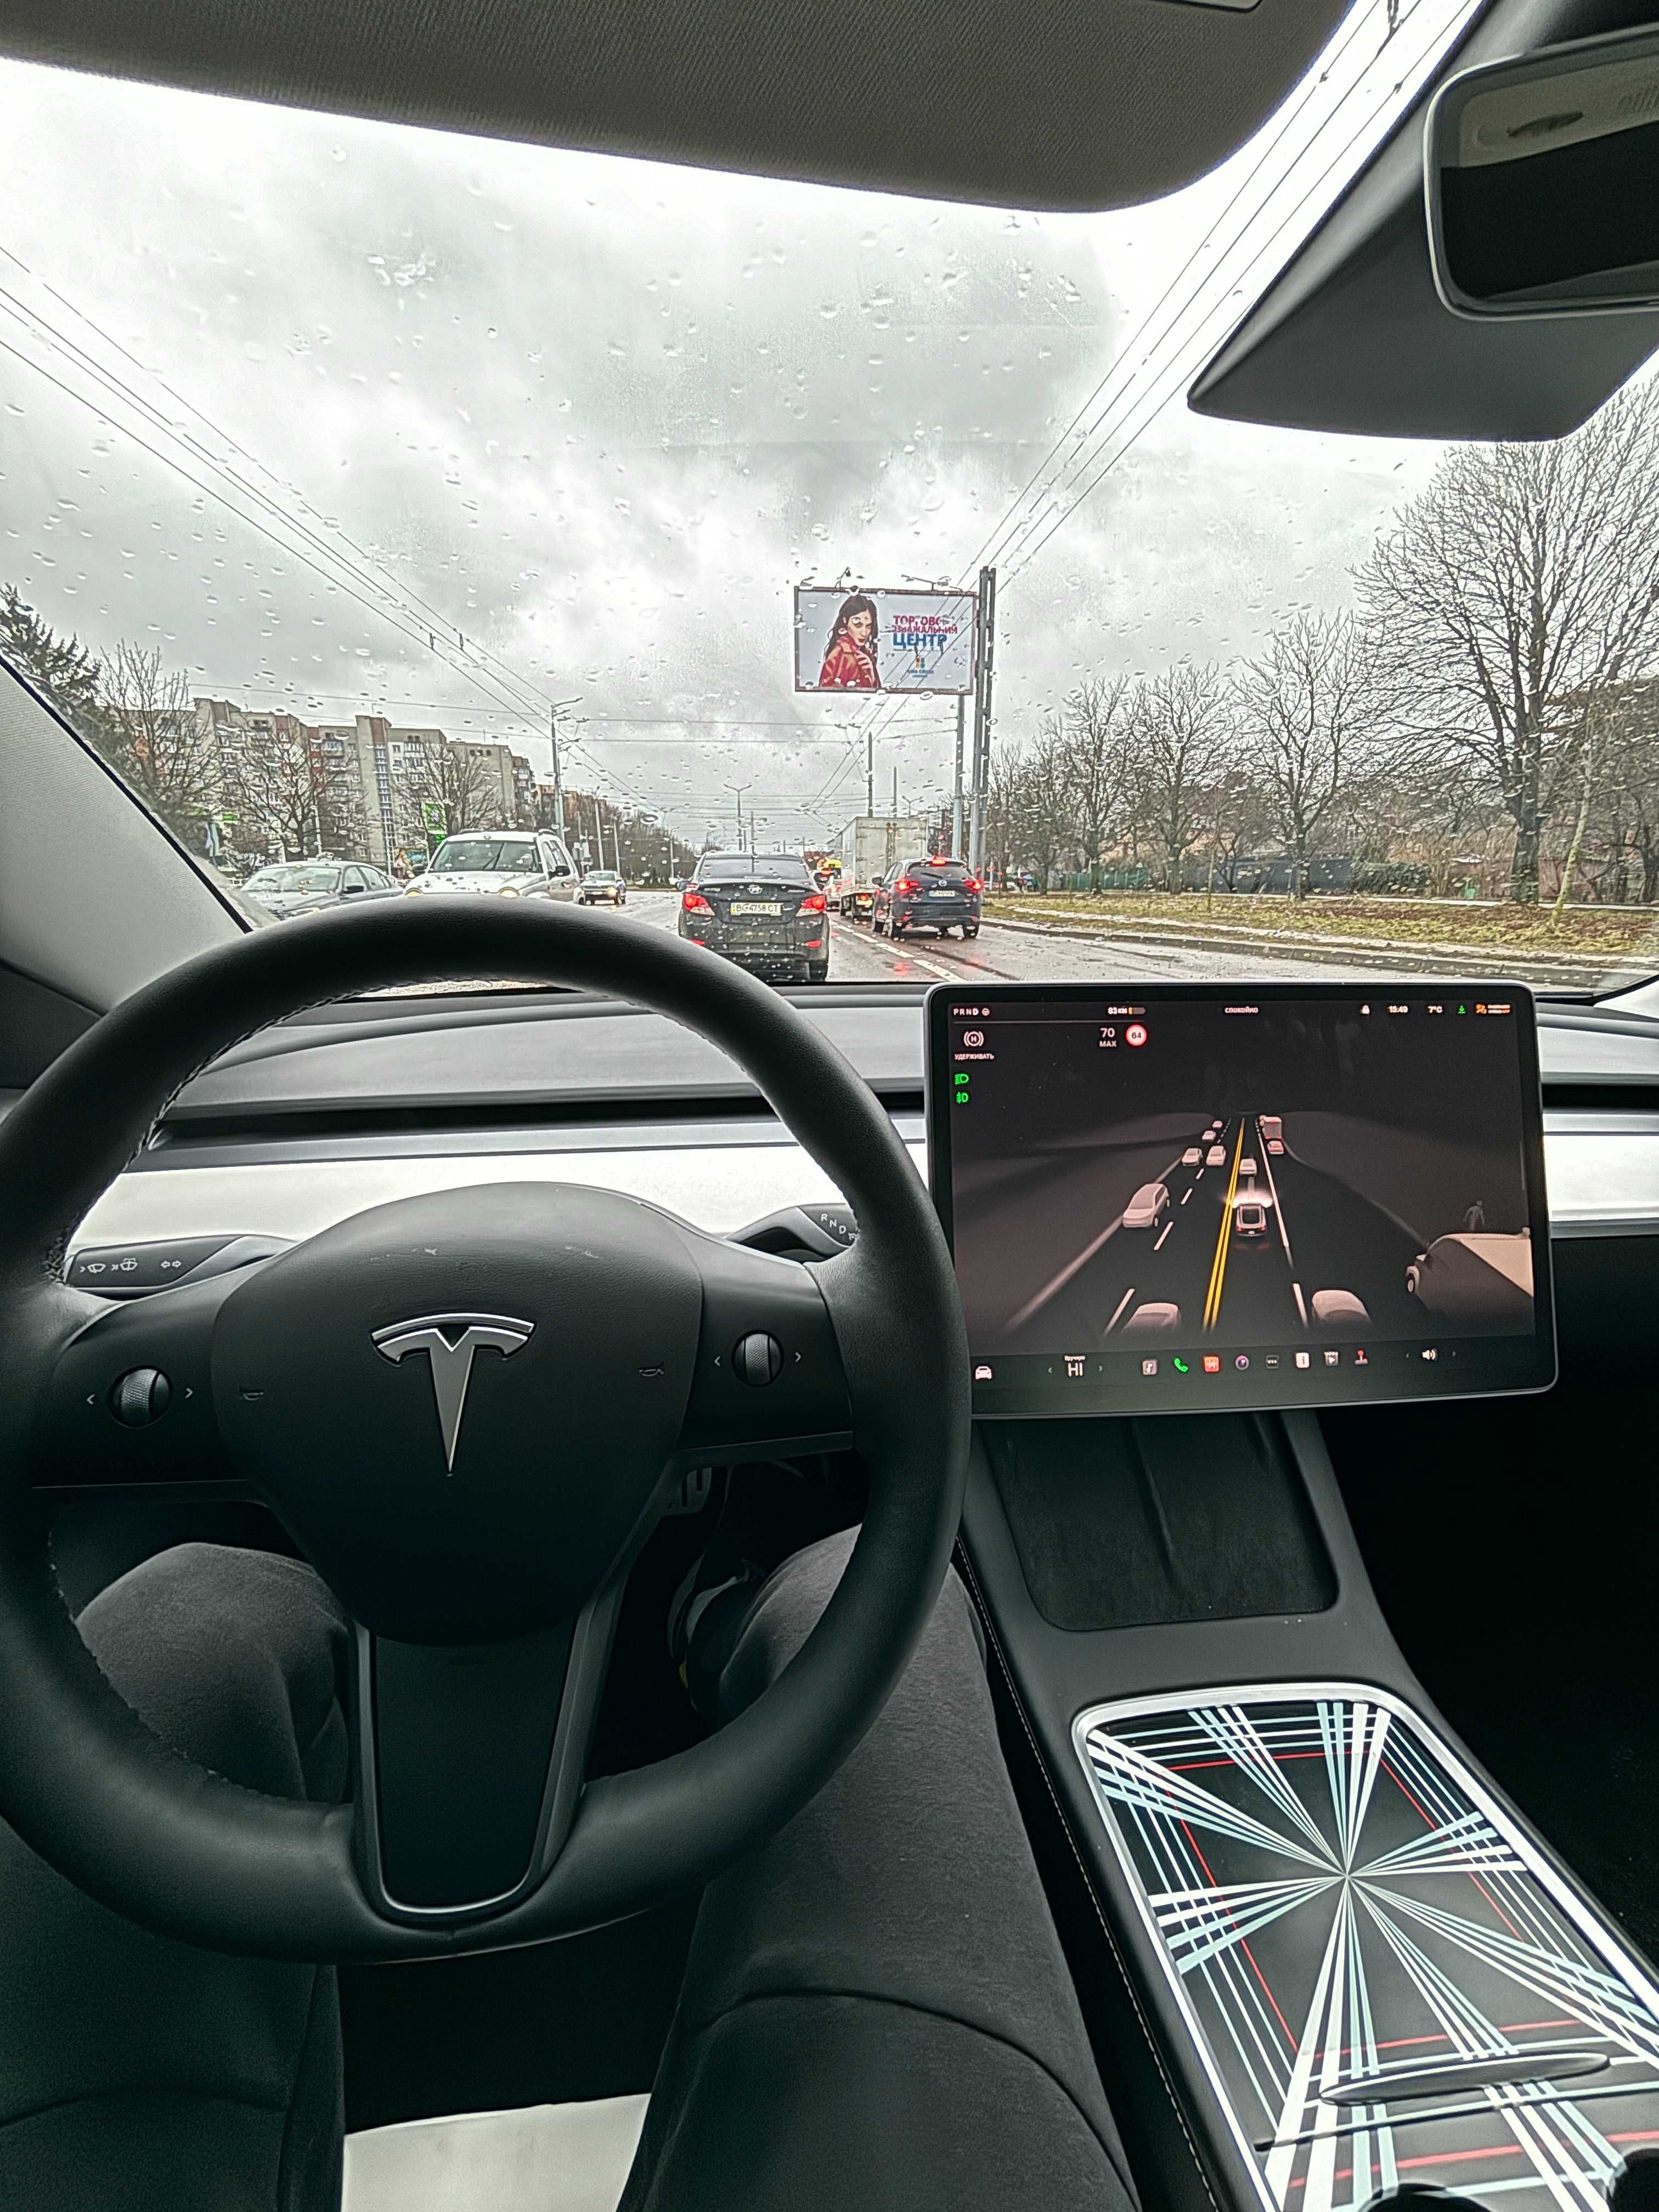 FSD Beta Активація автопілоту Tesla Full Self Drive Boost acceleration